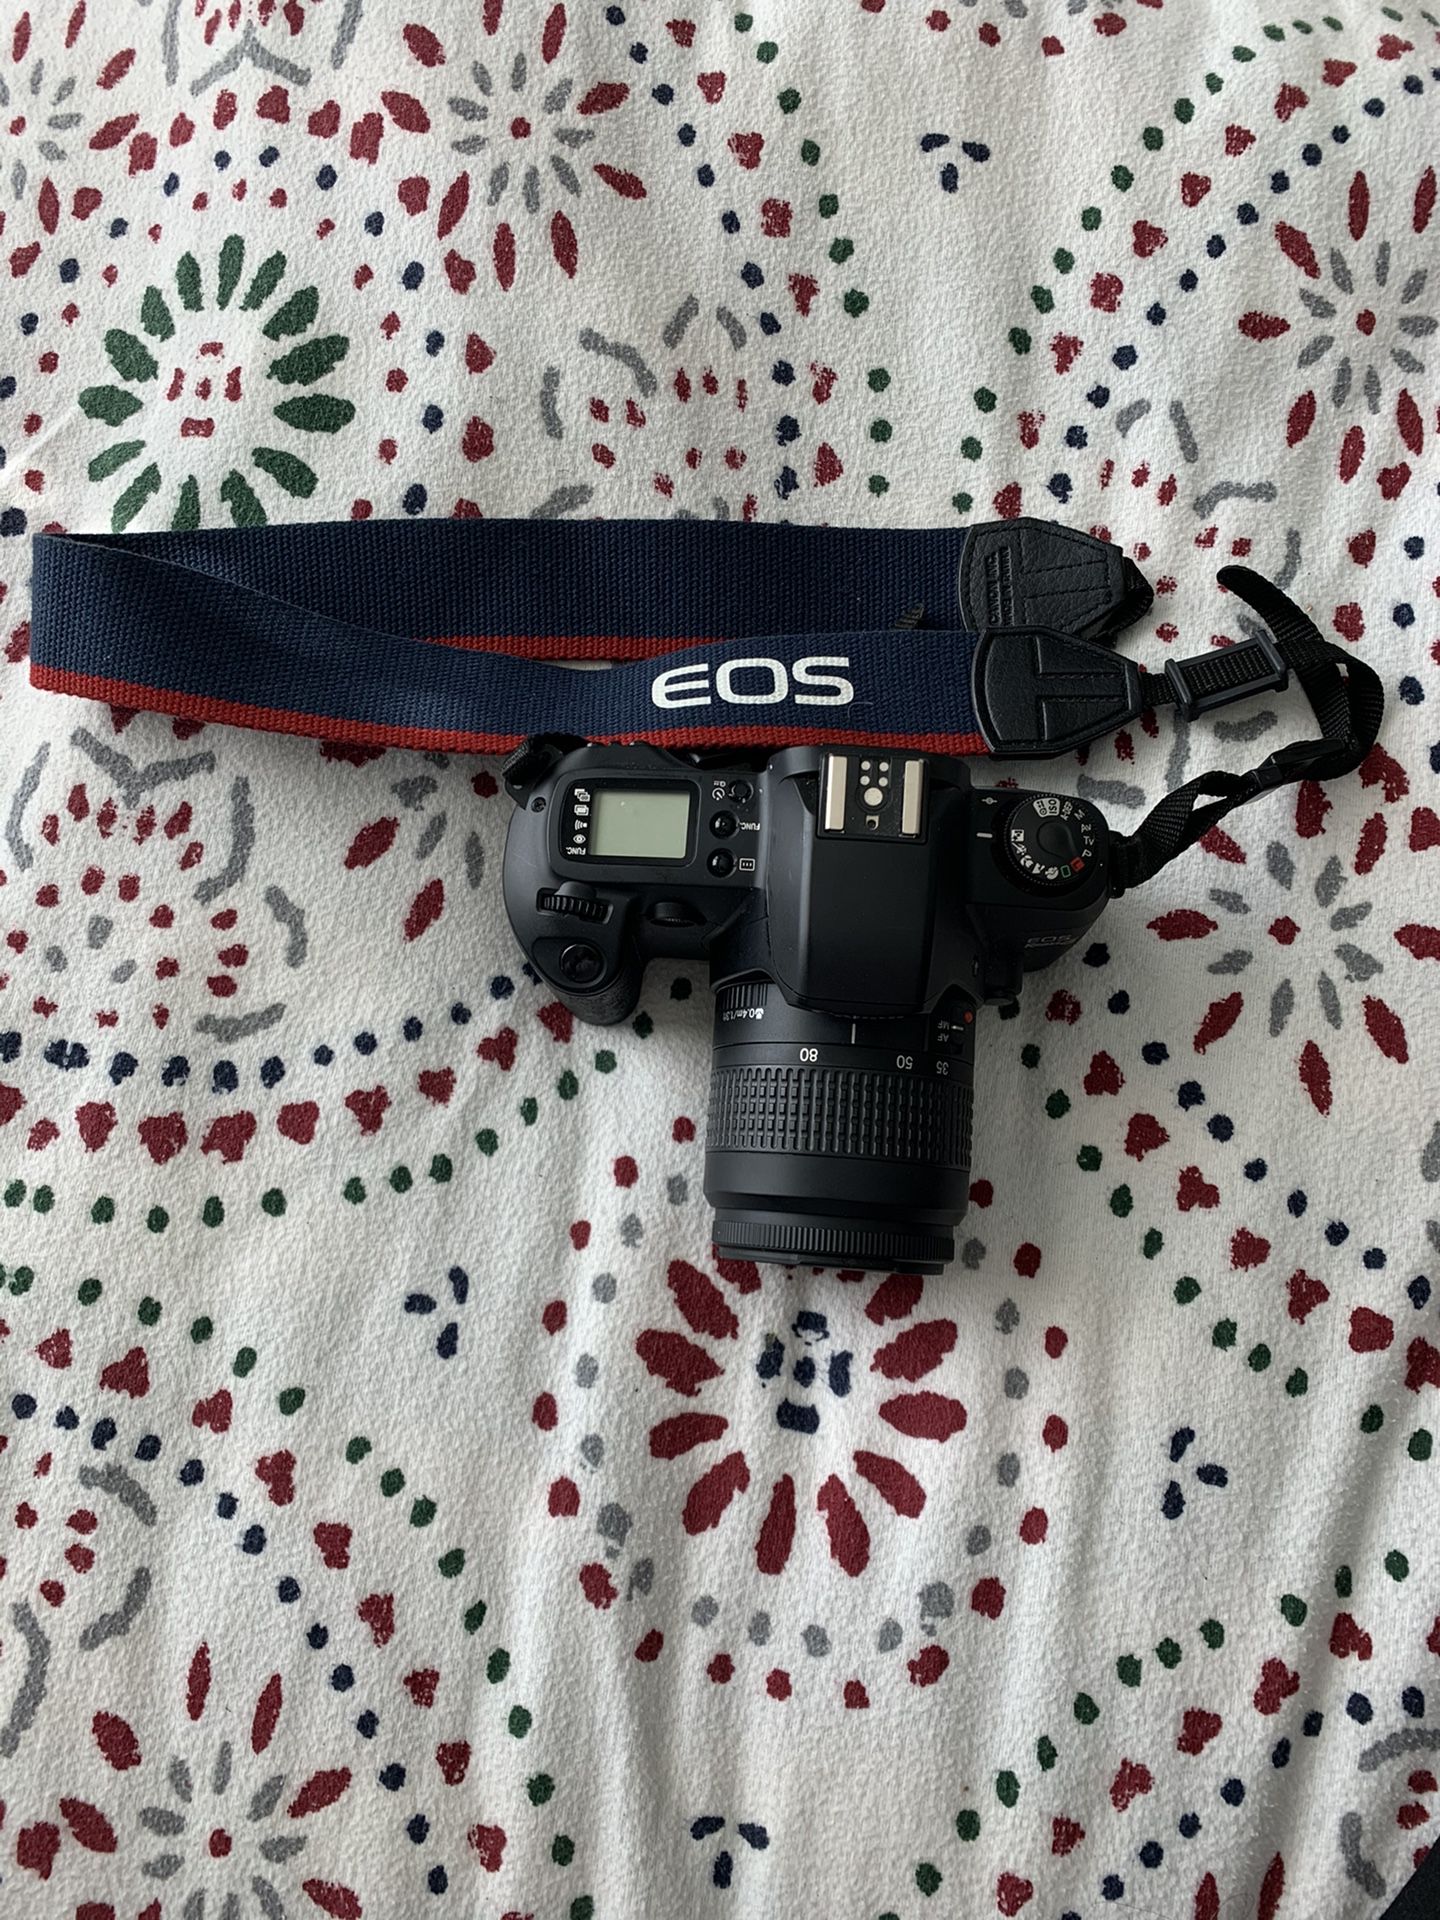 Canon EOS Rebel G Film SLR Camera Kit with 35-80mm Lens